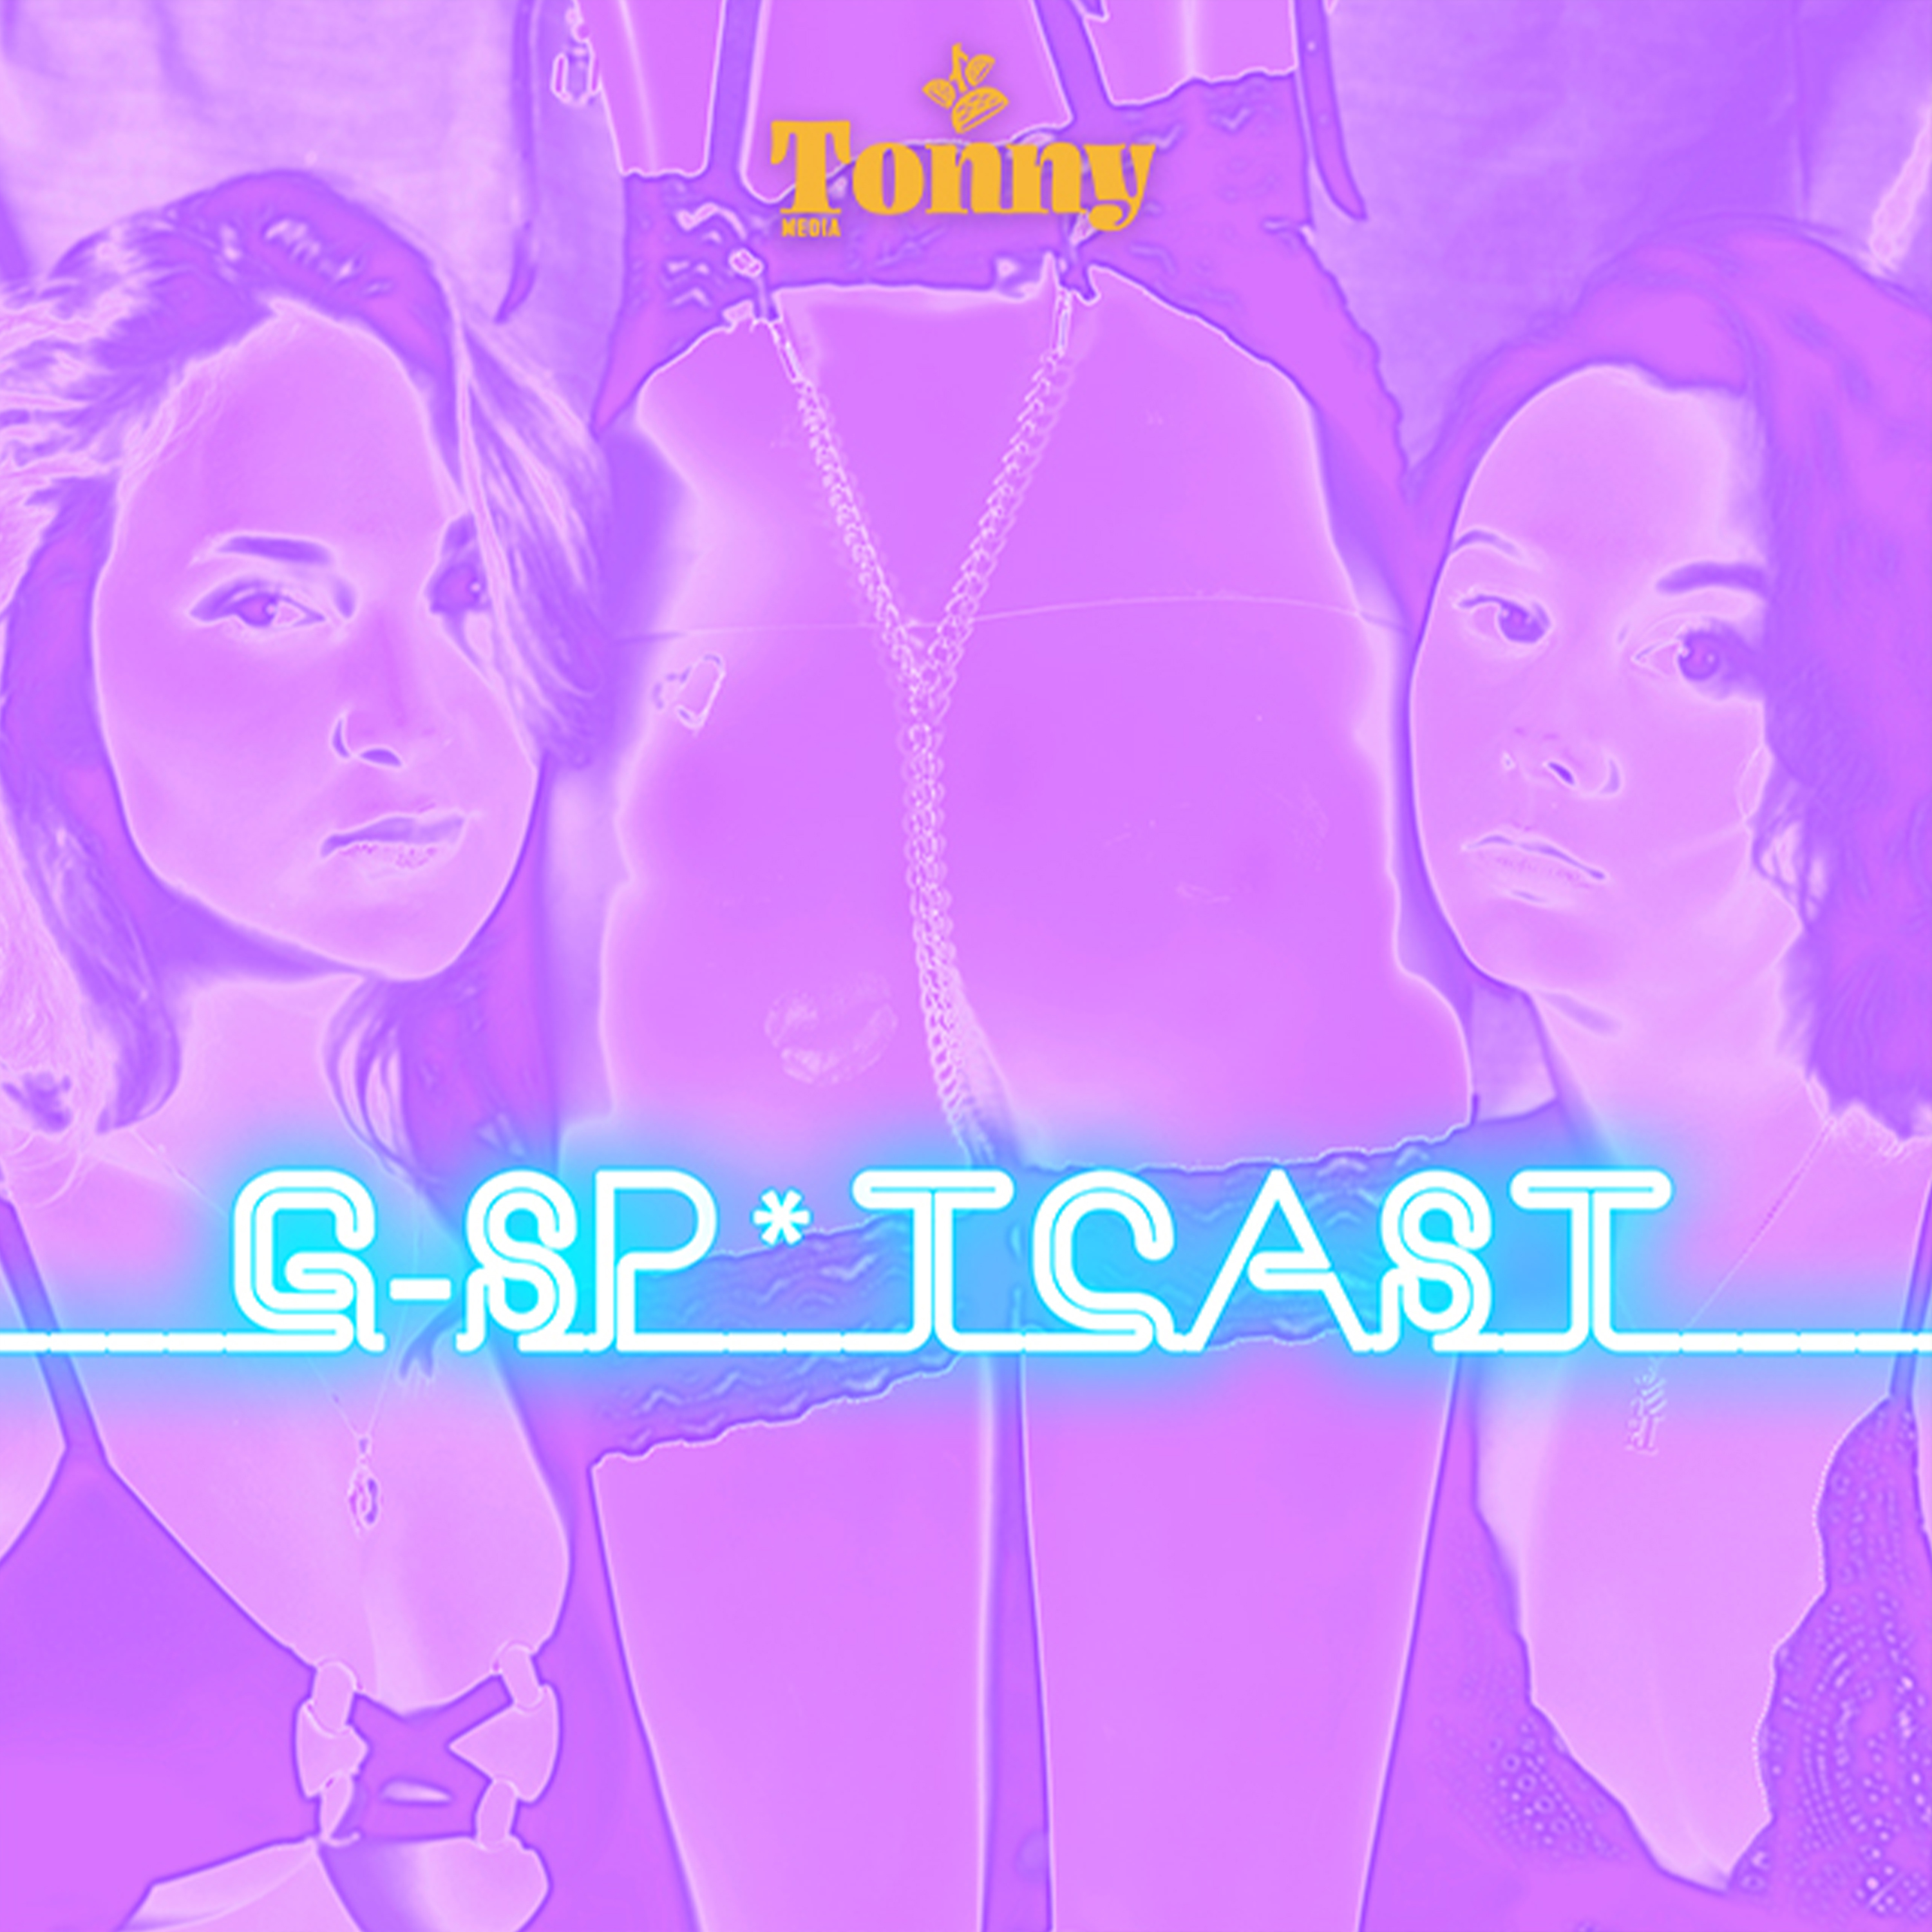 G-Spotcast logo